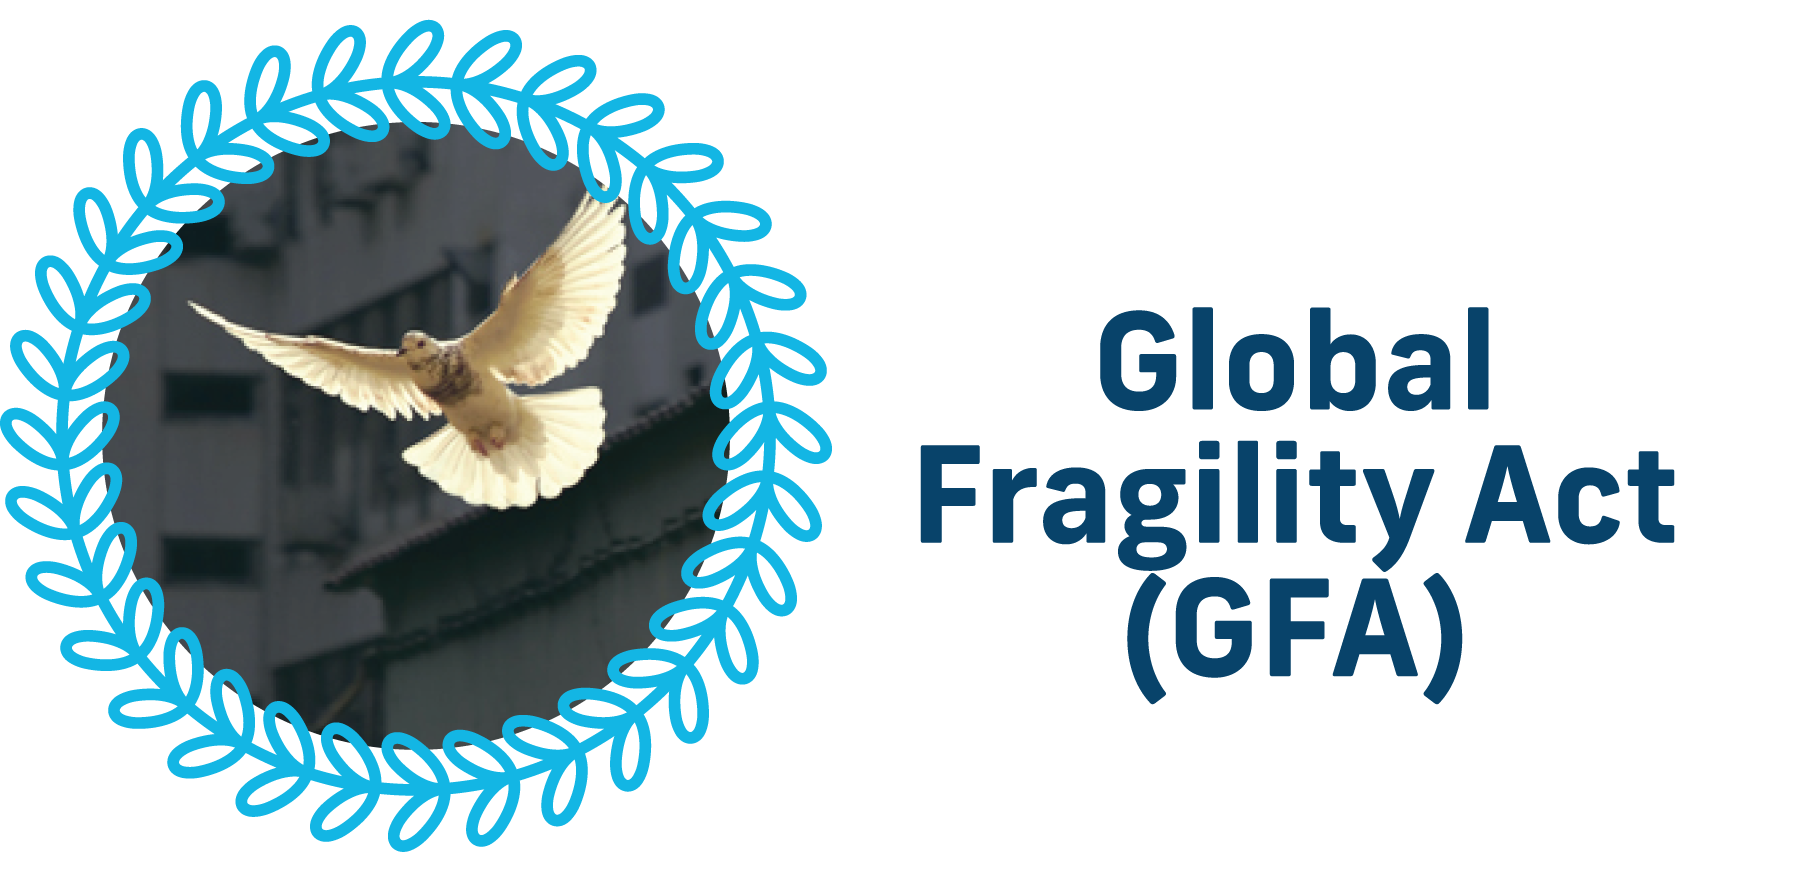 The Global Fragility Act